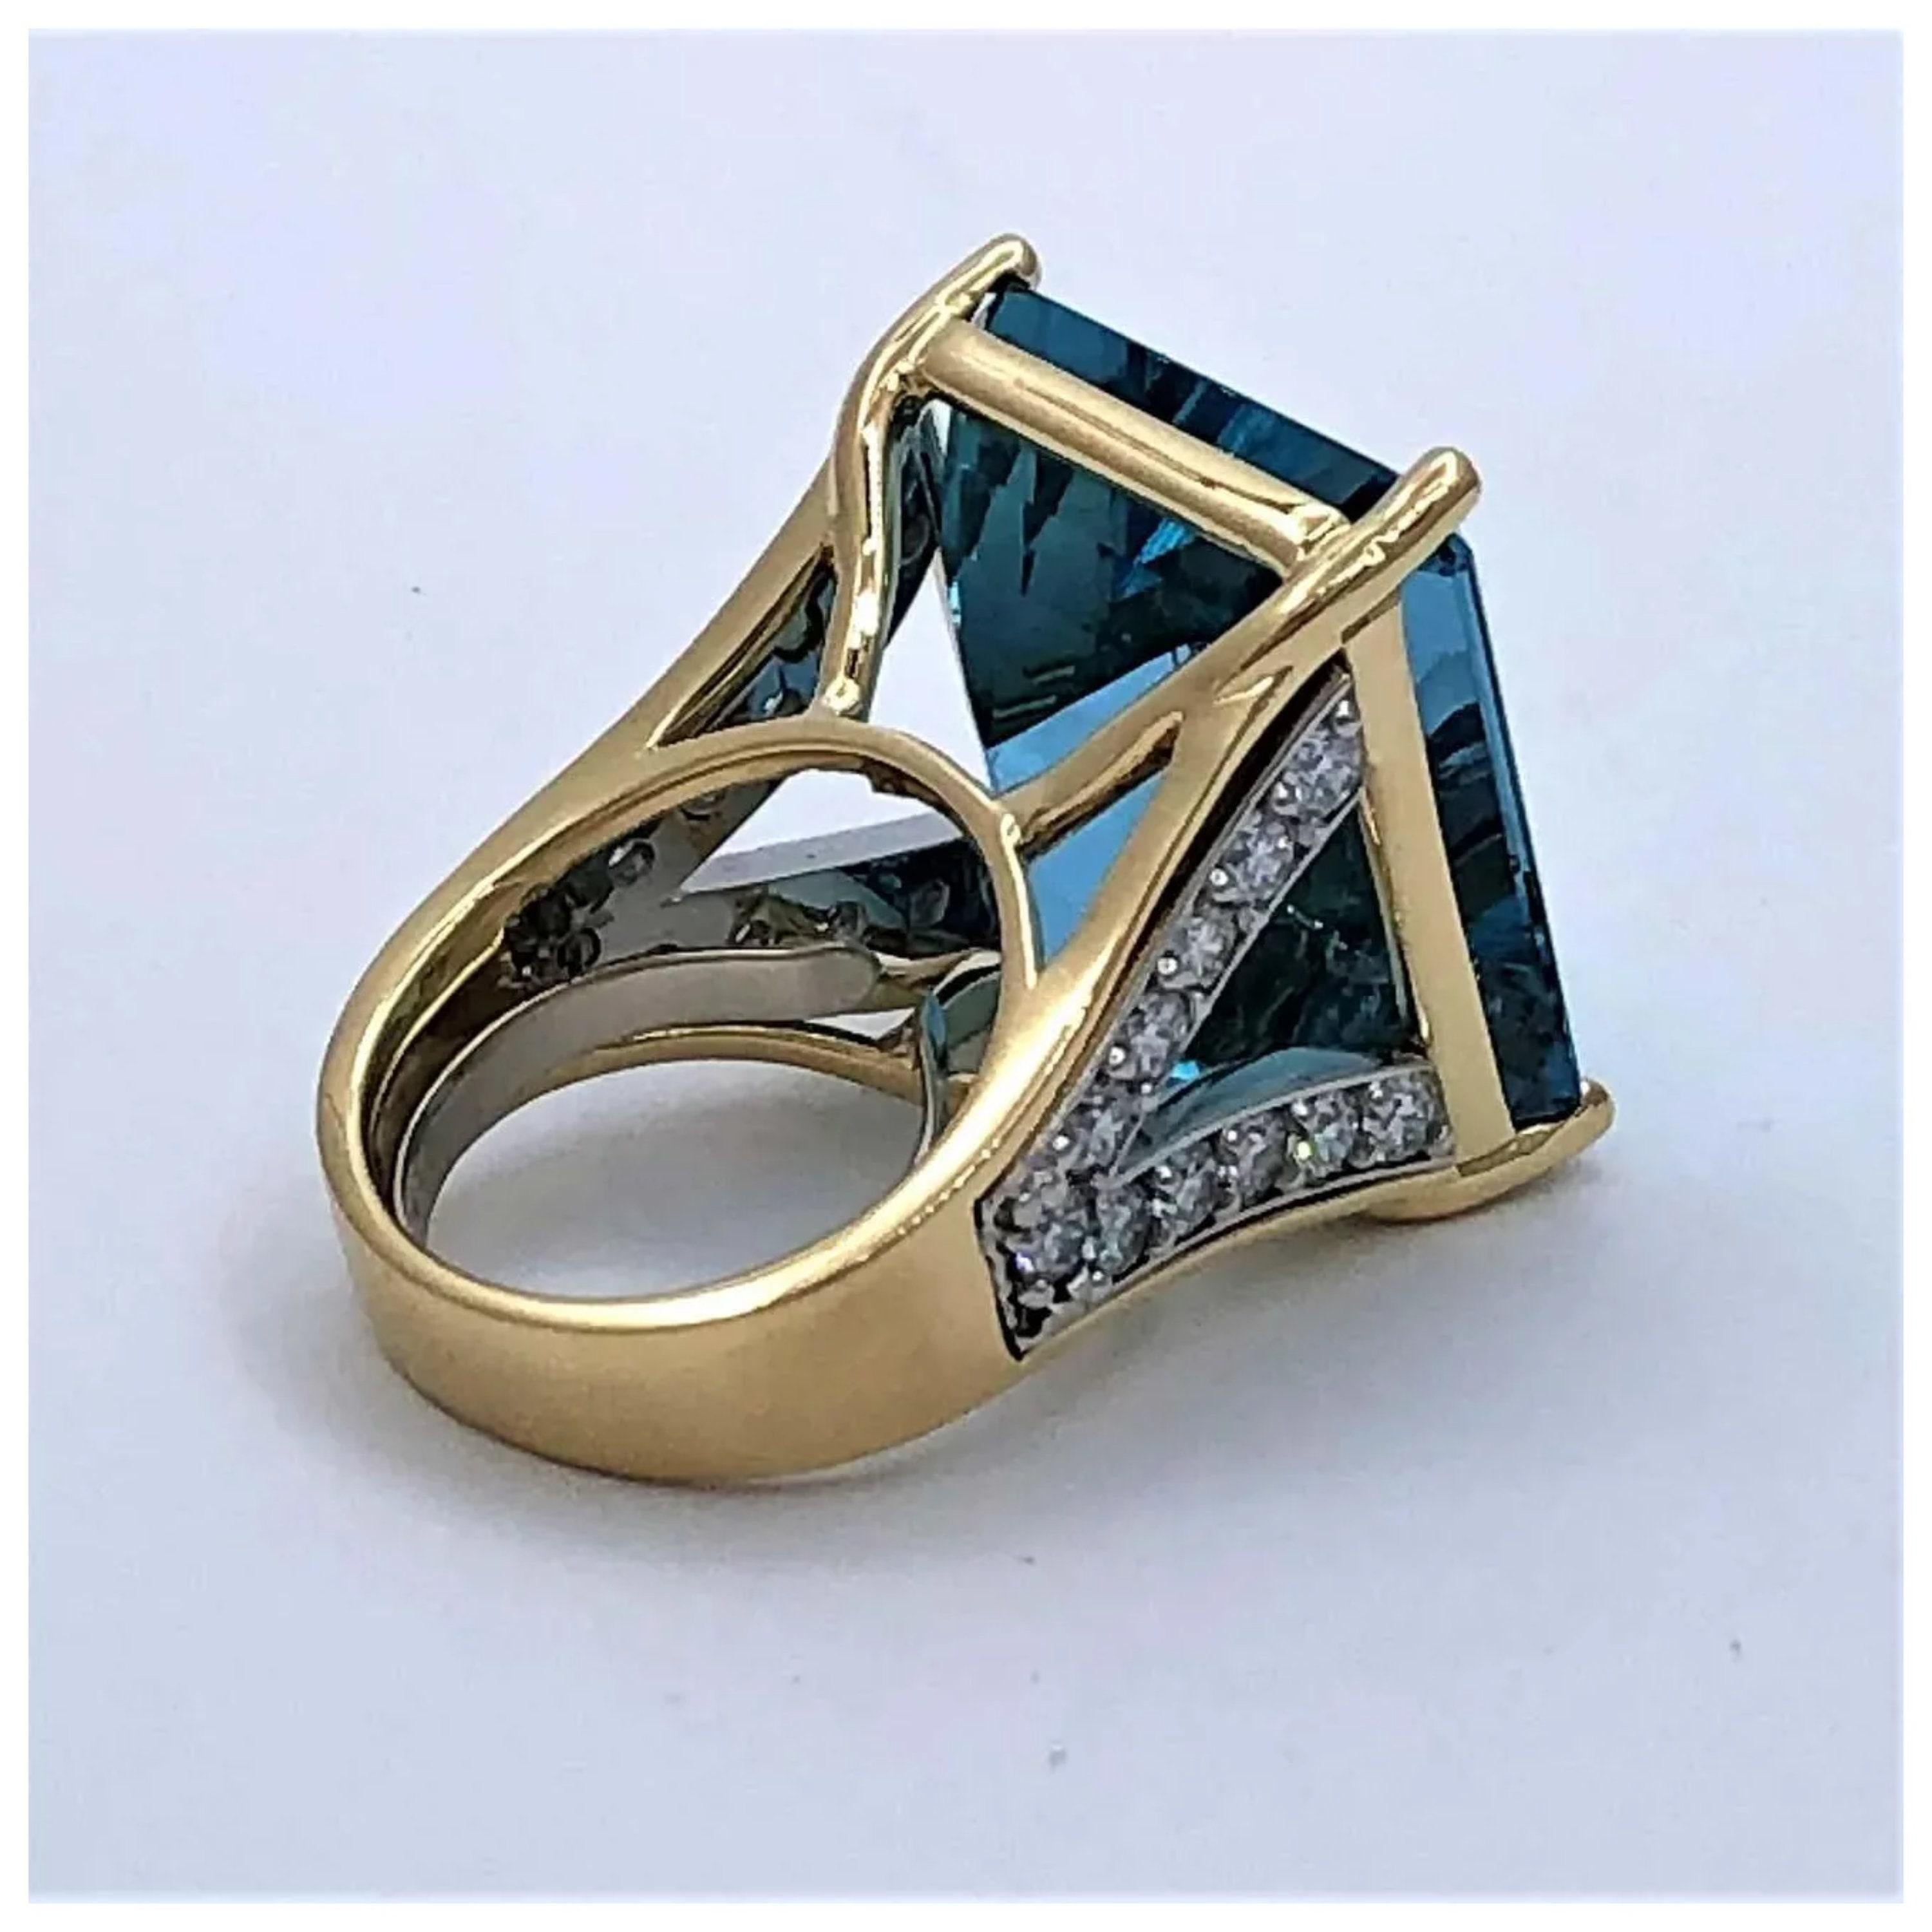 For Sale:  3.99 Carat Natural Emerald Cut Aquamarine Diamond Engagement Ring Cocktail Ring 3